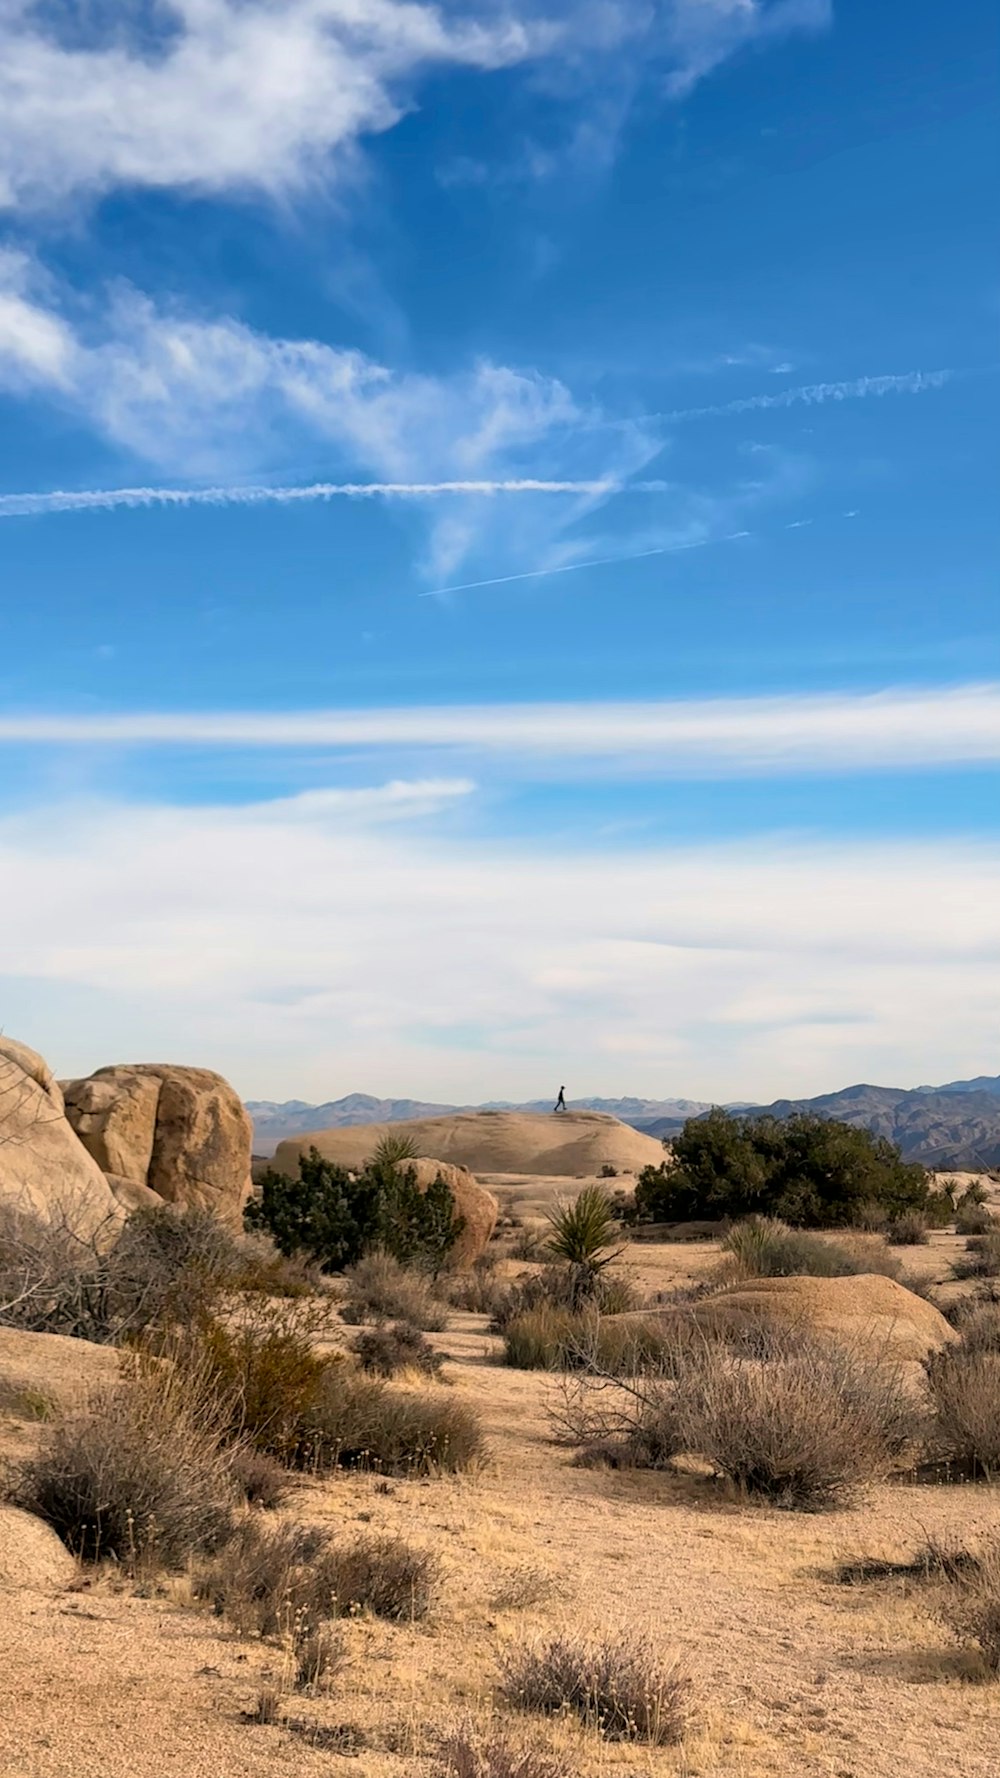 a desert landscape with rocks and bushes under a blue sky